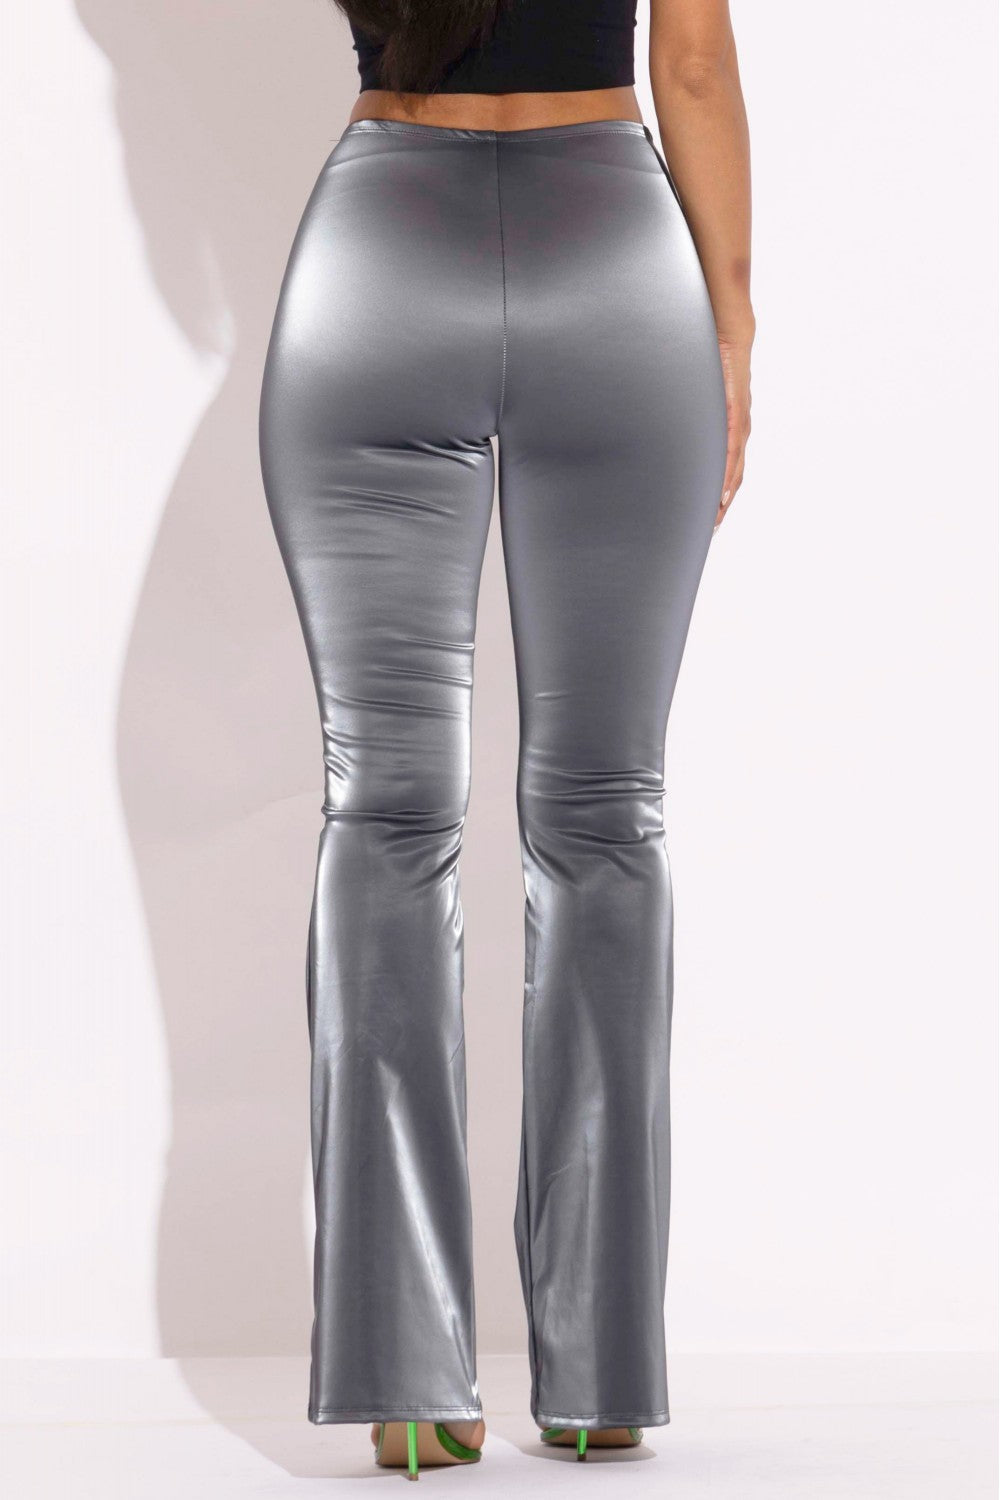 Velvet Pu Flared Pants - Tigbuls Variety Fashion